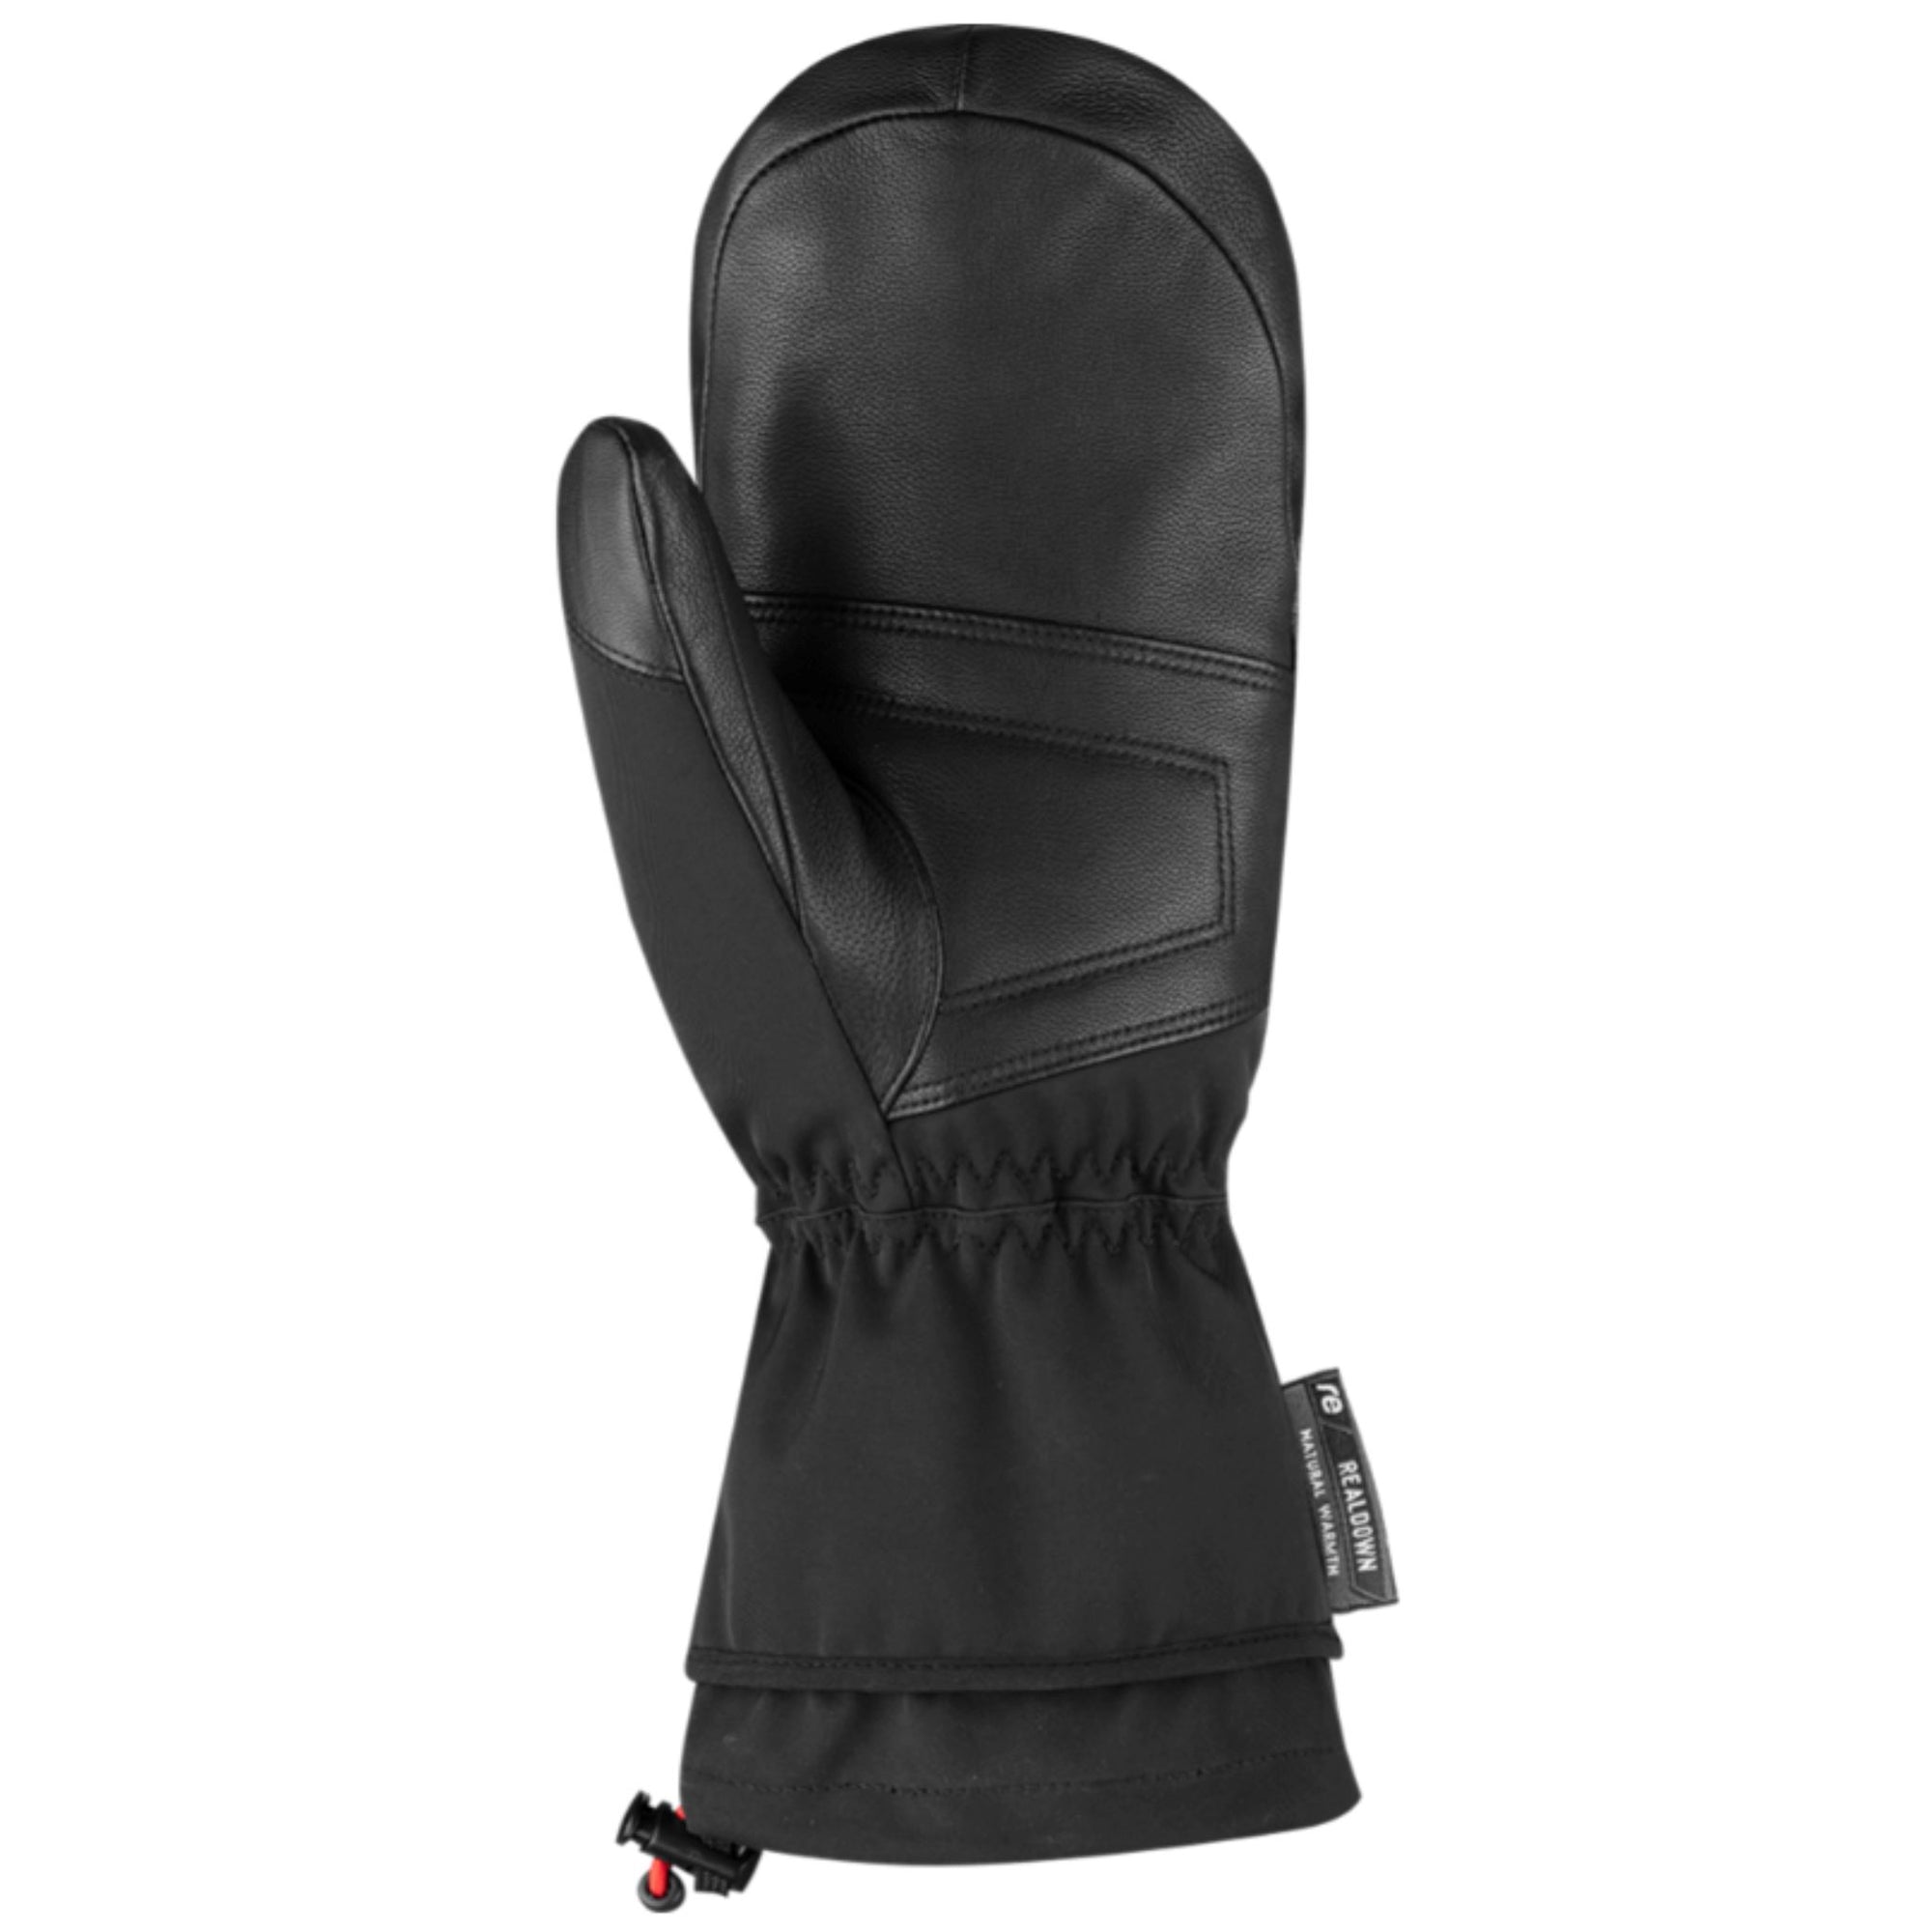 Reusch Down Spirit GORE-TEX Mitten - Black/Silver Gloves Reusch S / 7.5 